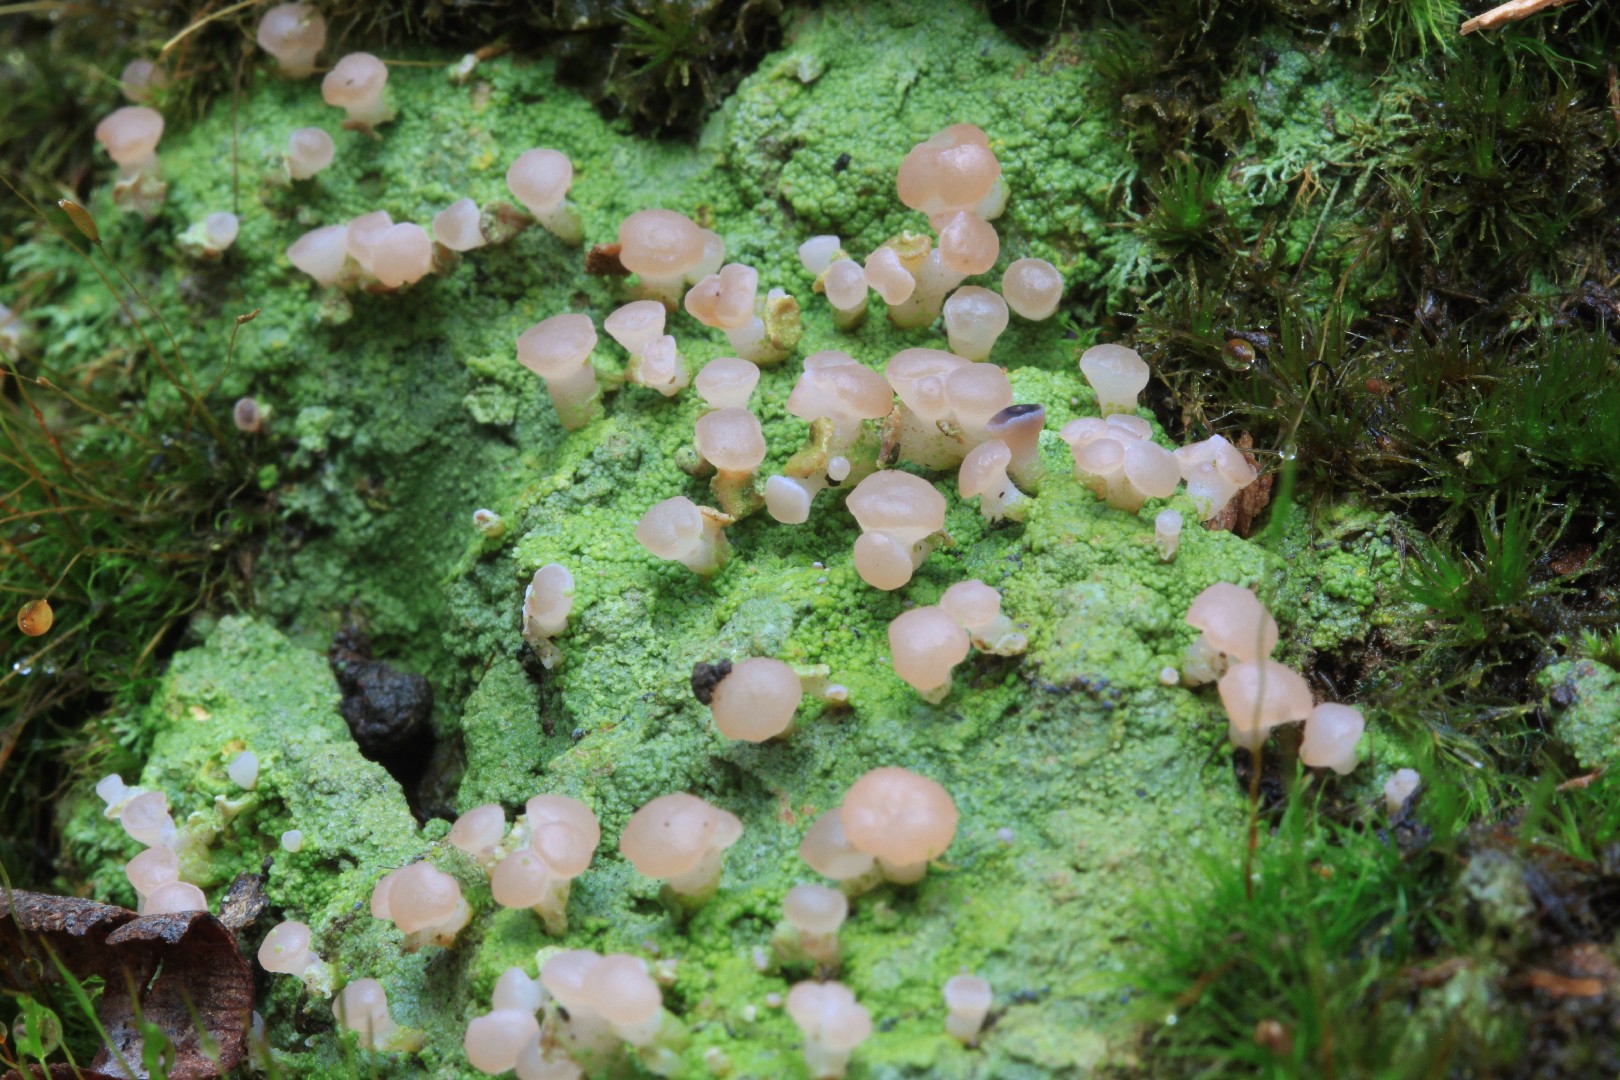 Cap lichens (Baeomyces)